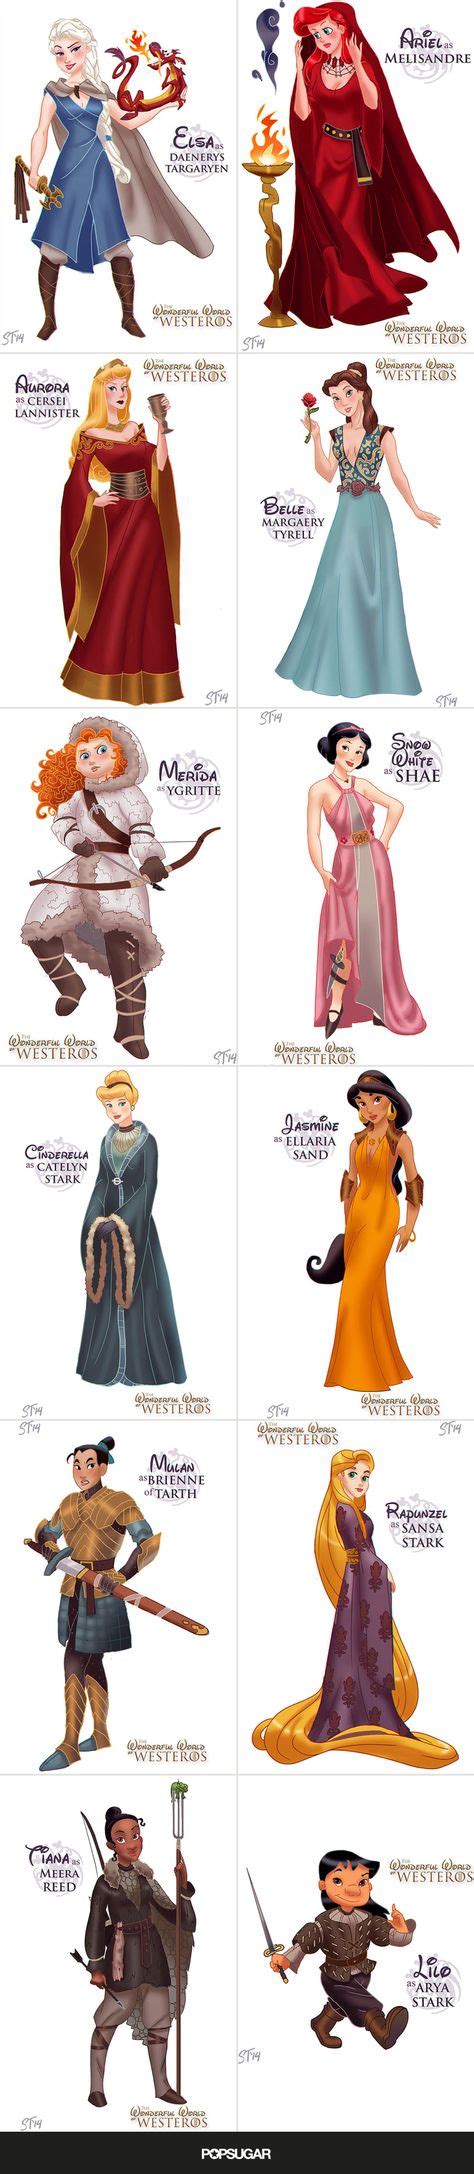 disney princesses as the women of game of thrones filmverrückt game of throne lustig